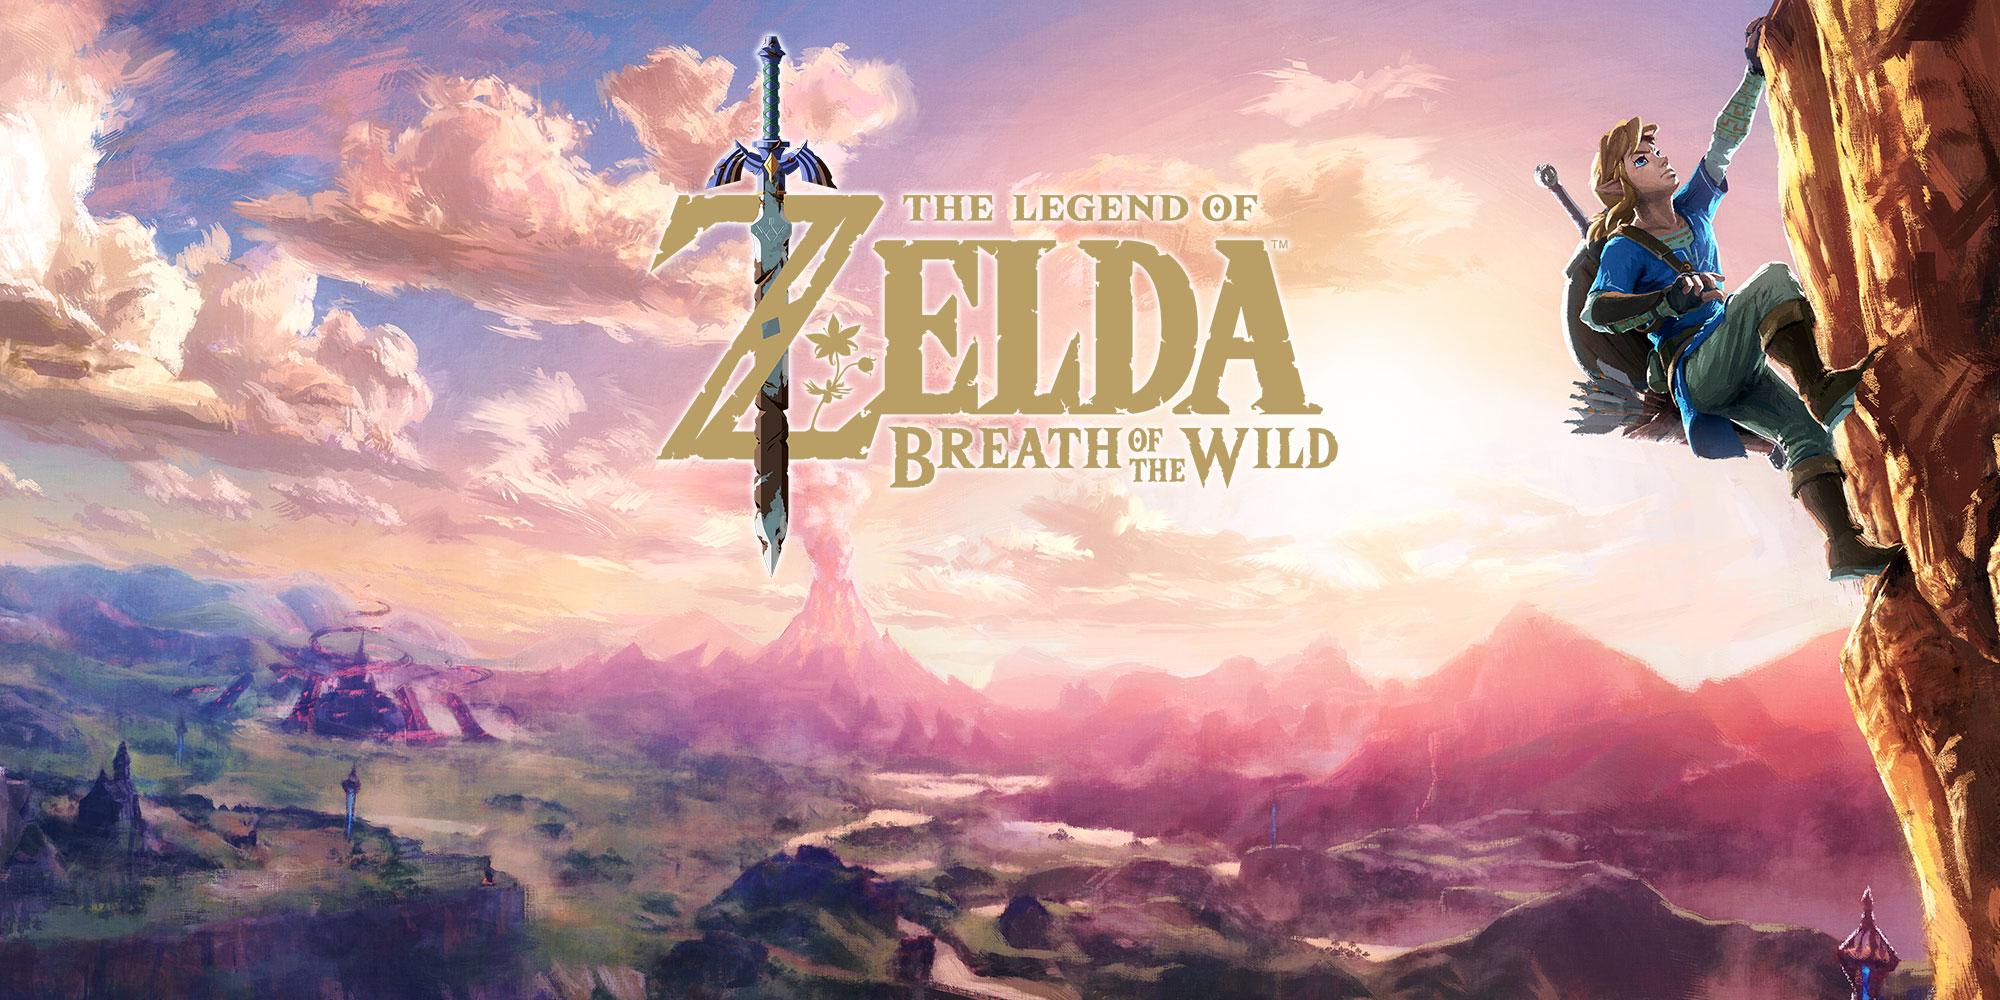 High Resolution Wallpaper | The Legend Of Zelda: Breath Of The Wild 2000x1000 px